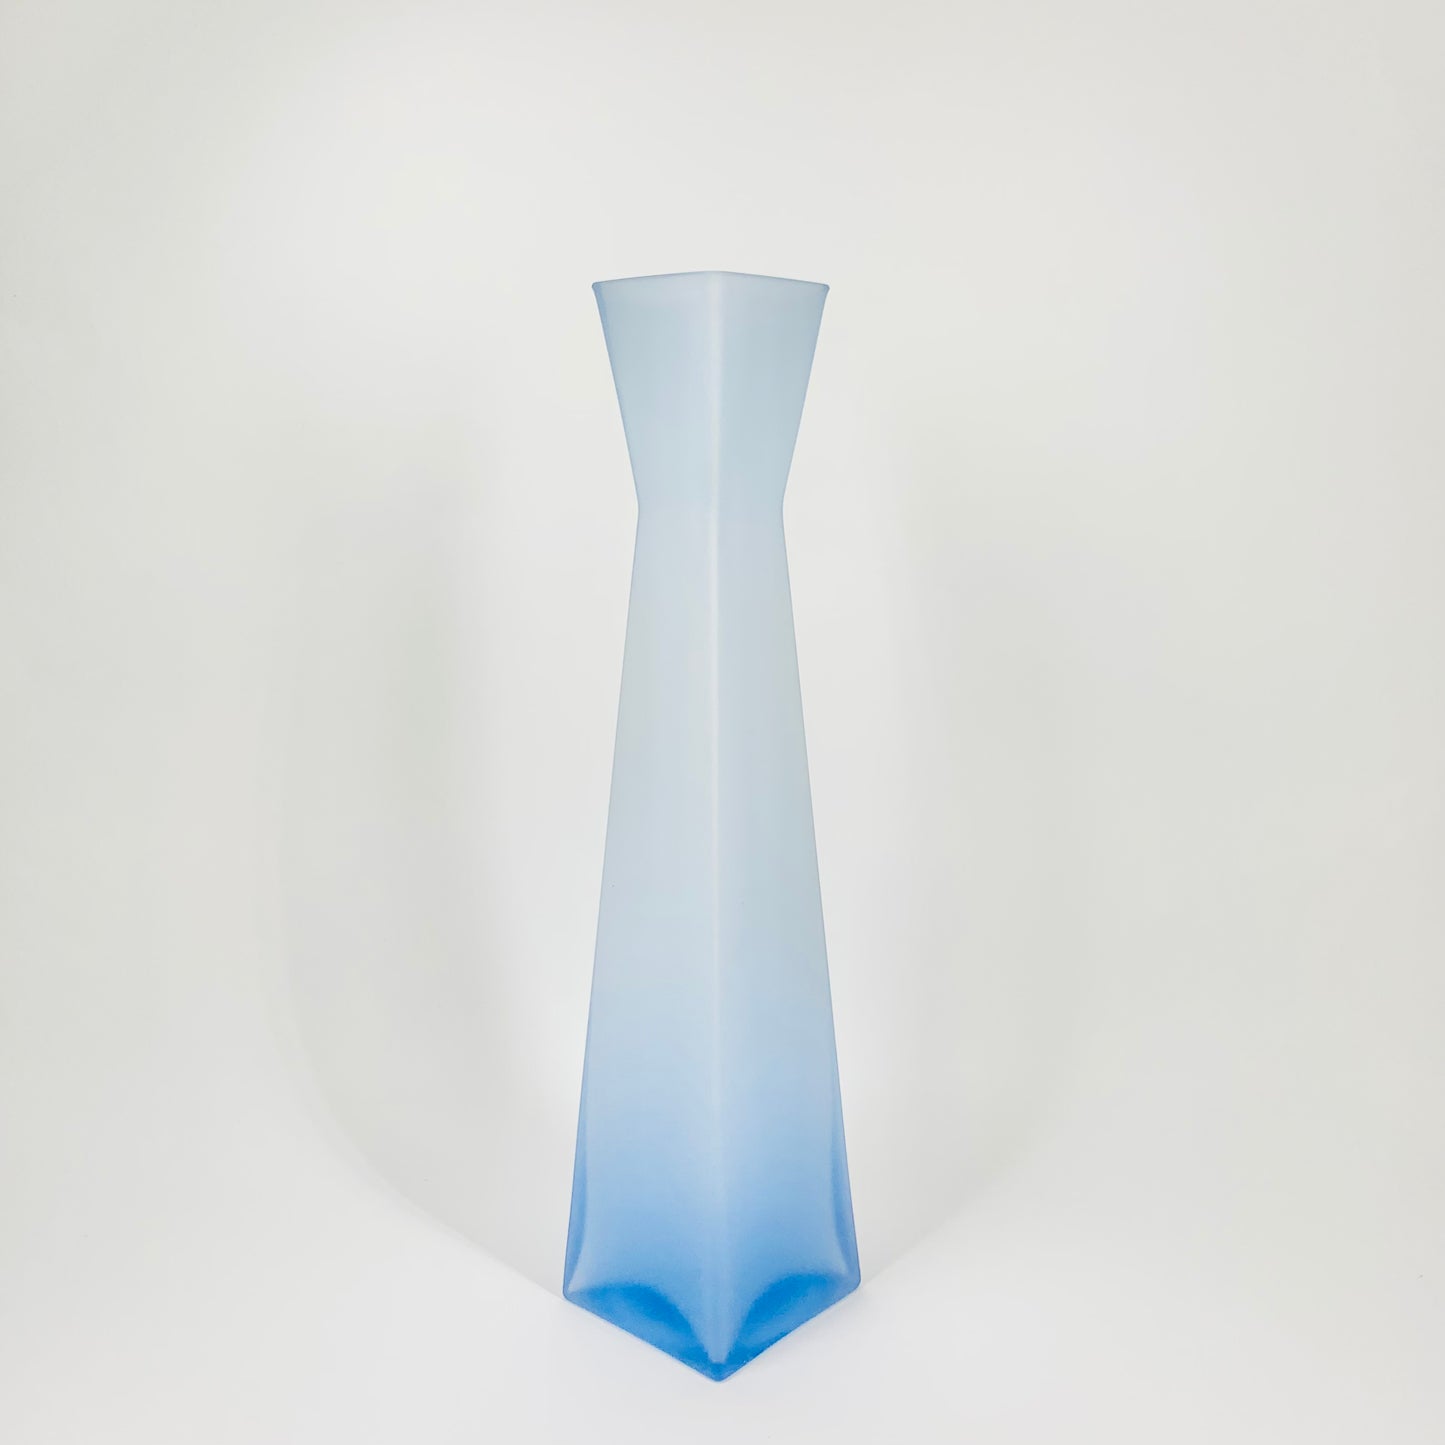 MCM hand made blue satin glass vase